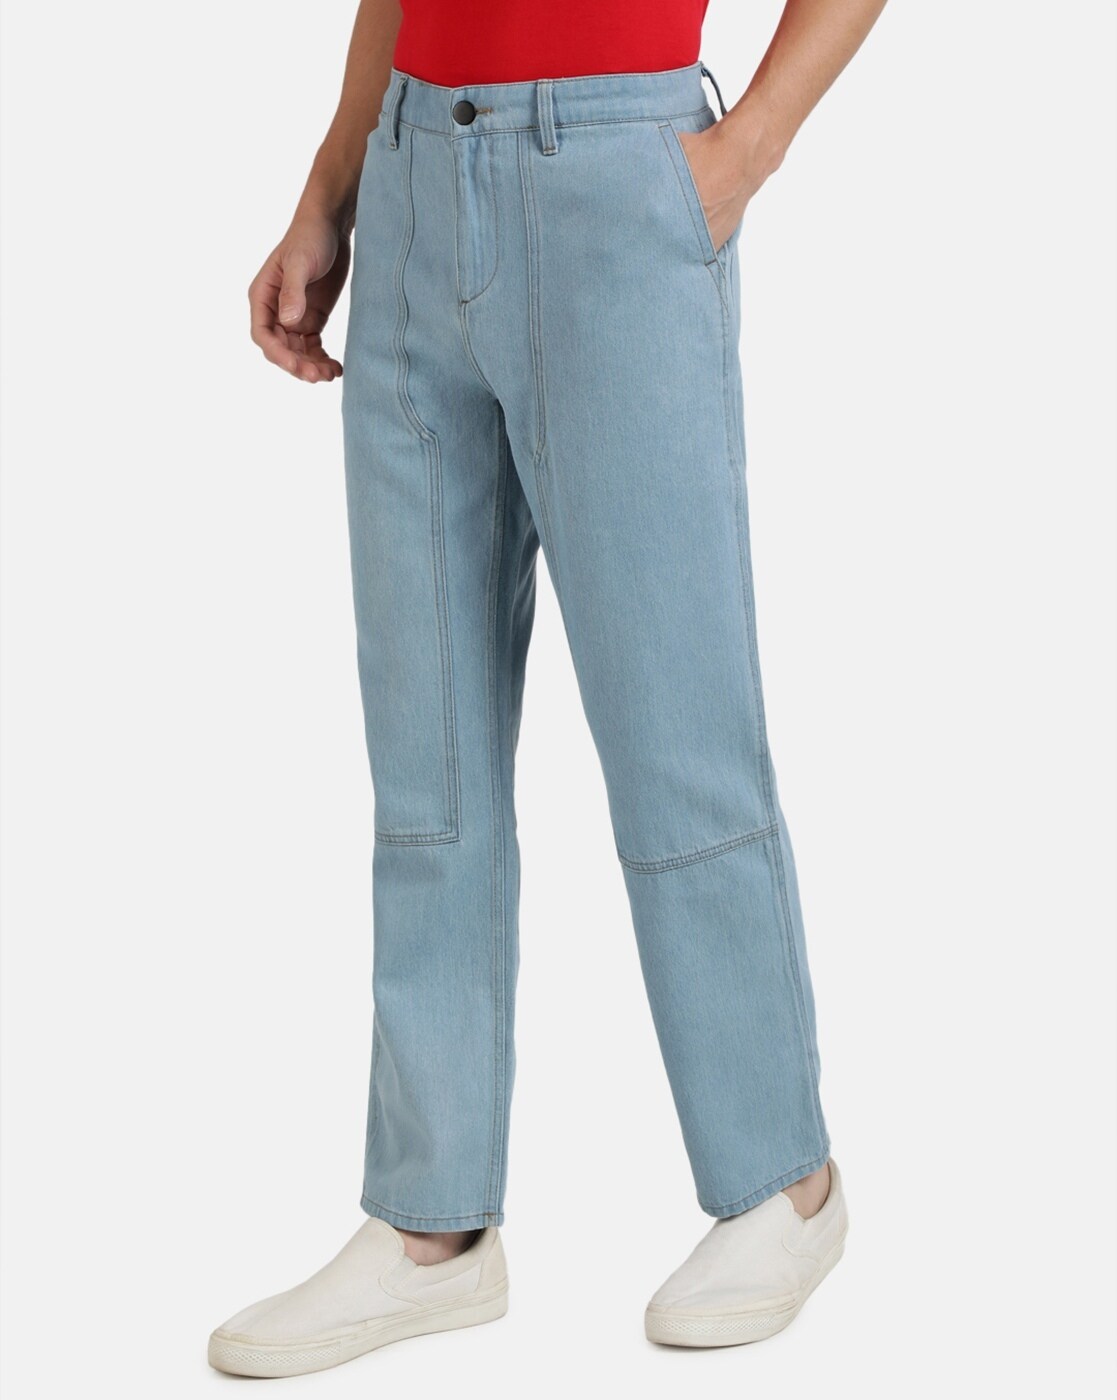 35.0US $ |Girls Jeans For Kids Denim Pants Teenage Jeans For Girls Wide Leg  Pants 10 12 Year Elastic High Waist Children… | Kids denim pants, Kids denim,  Kids pants